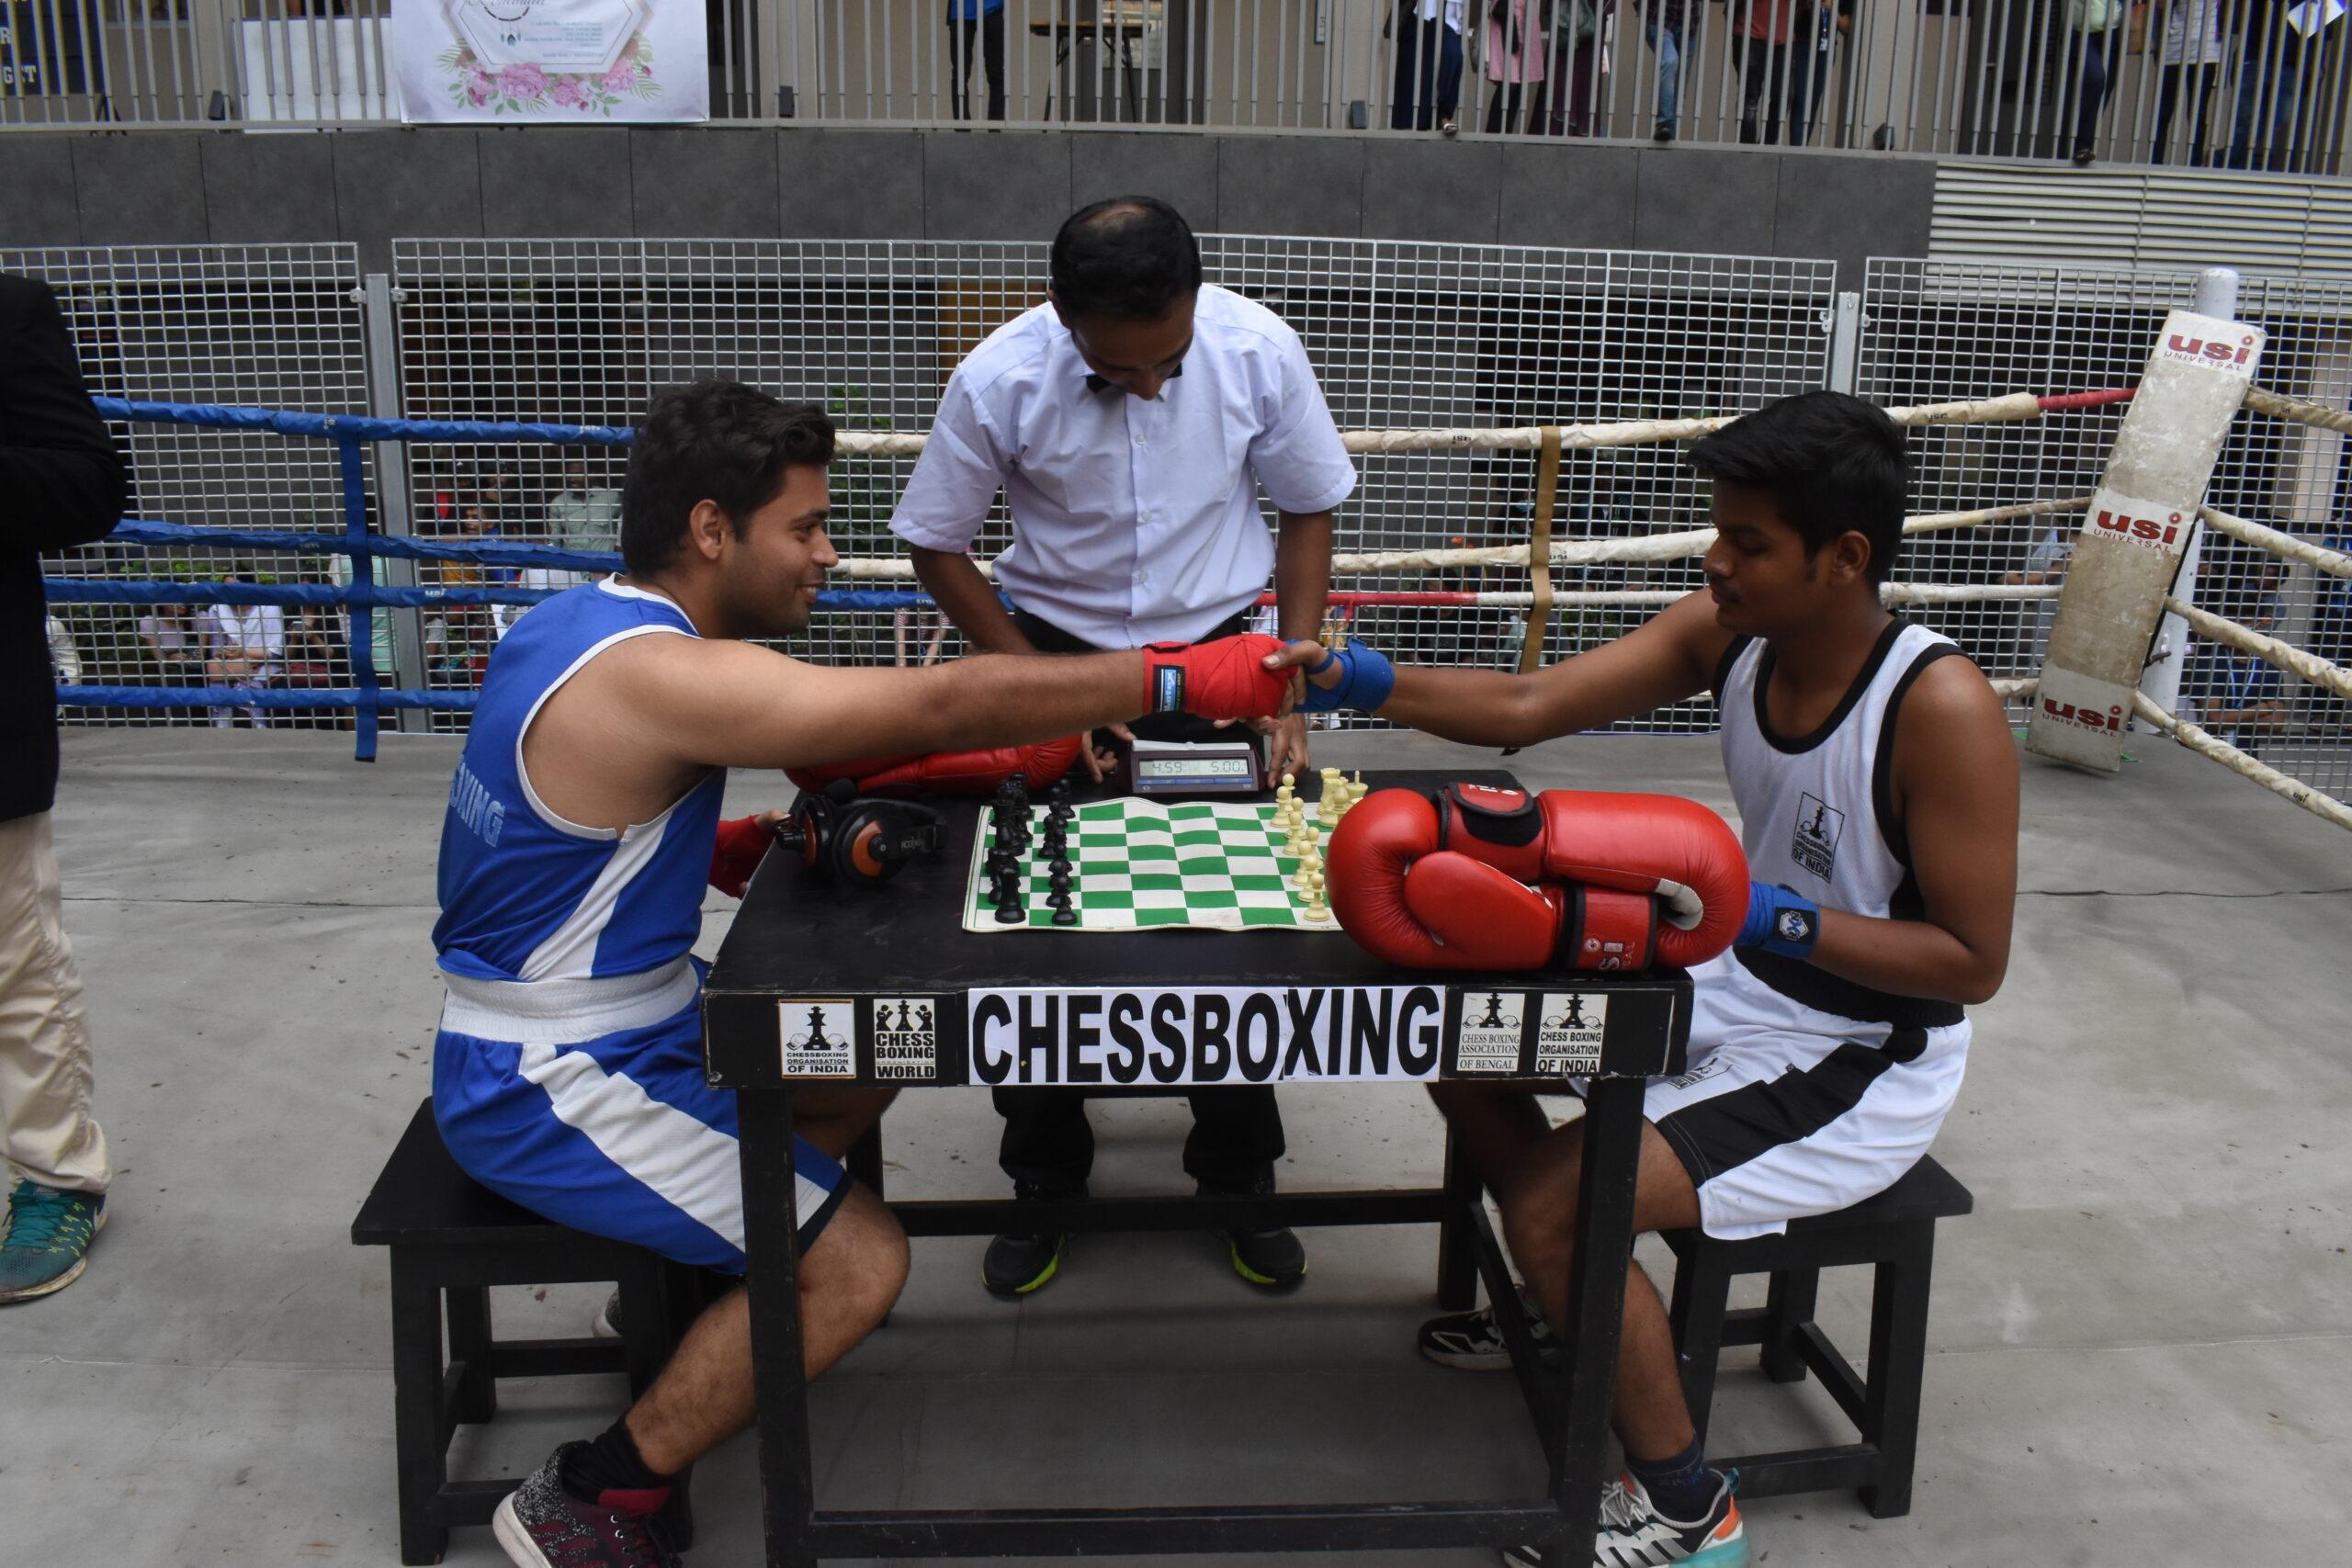 Chess boxing association of kerala